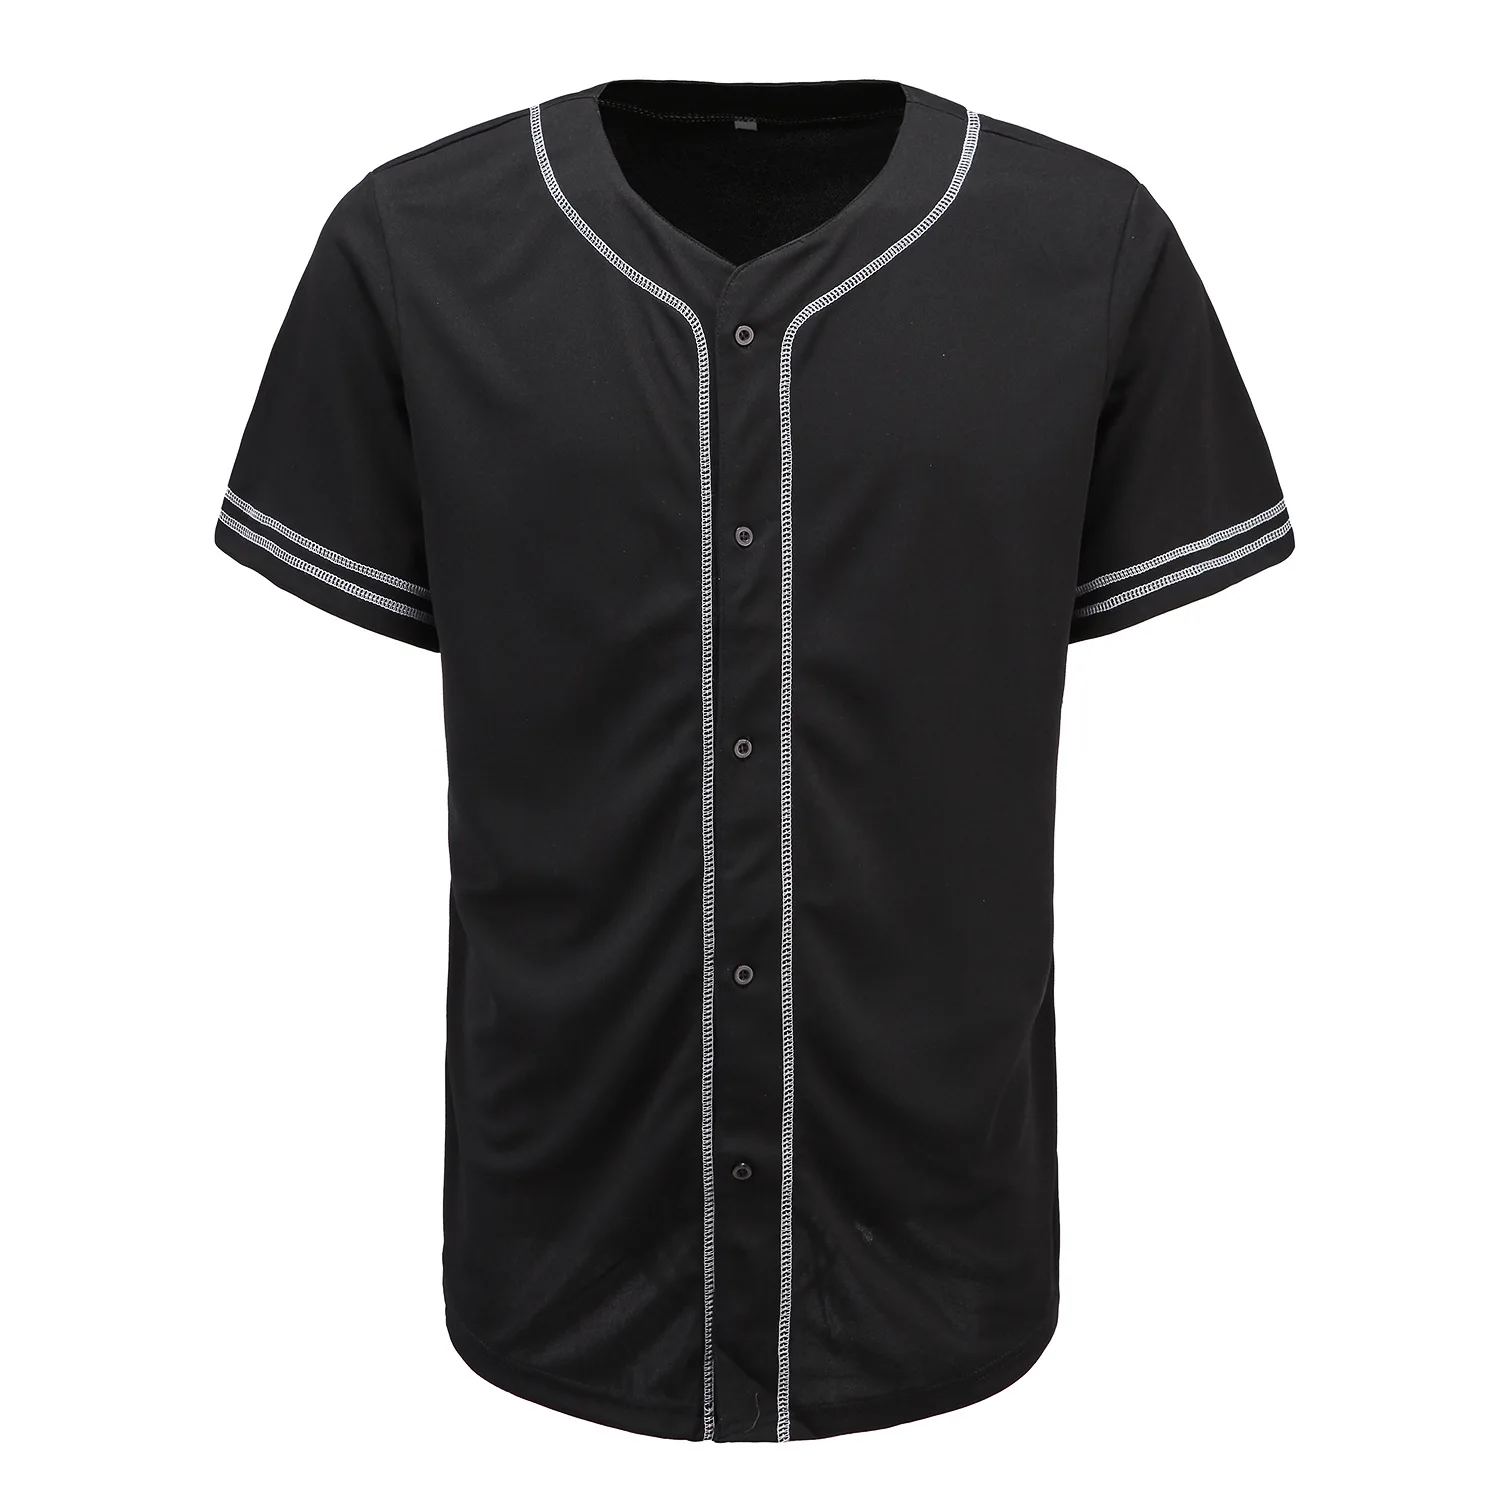 MESOSPERO Mens Blank Plain Baseball Jersey Button Down Shirts